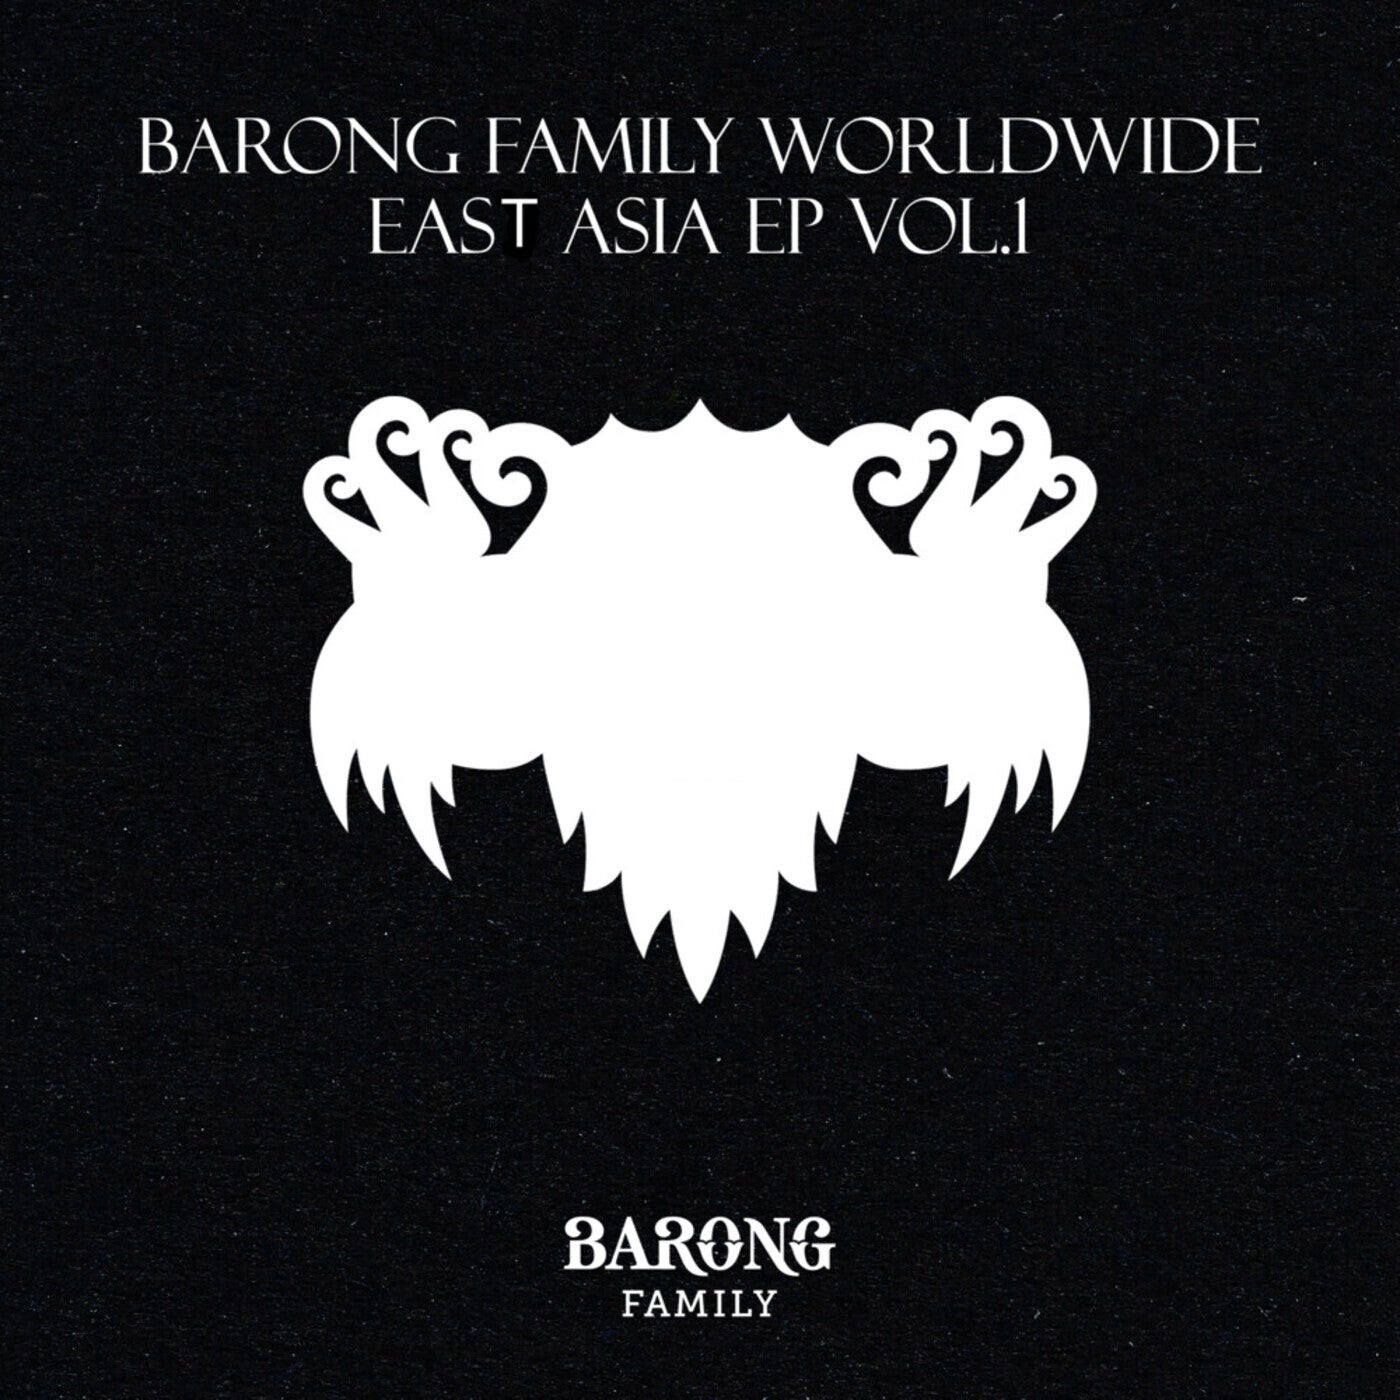 Barong Family Worldwide East Asia, Vol. 1